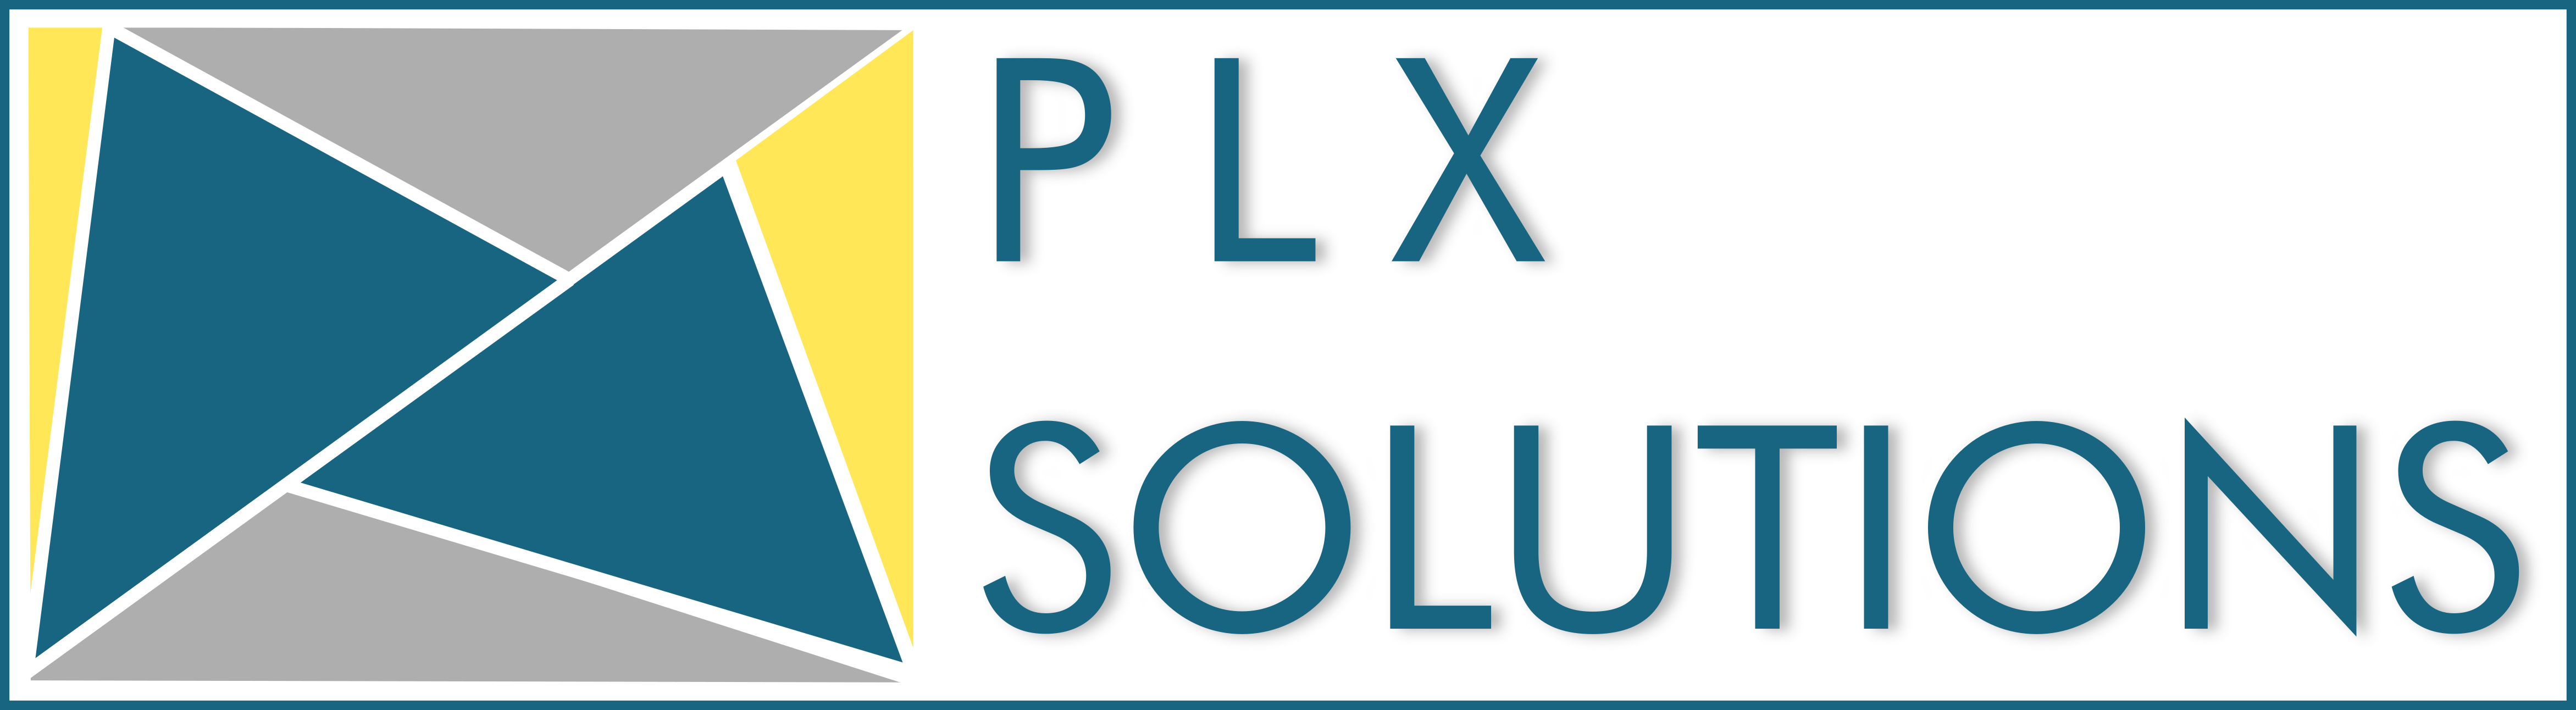 PLX SOLUTIONS - Consultant expert en maintenance